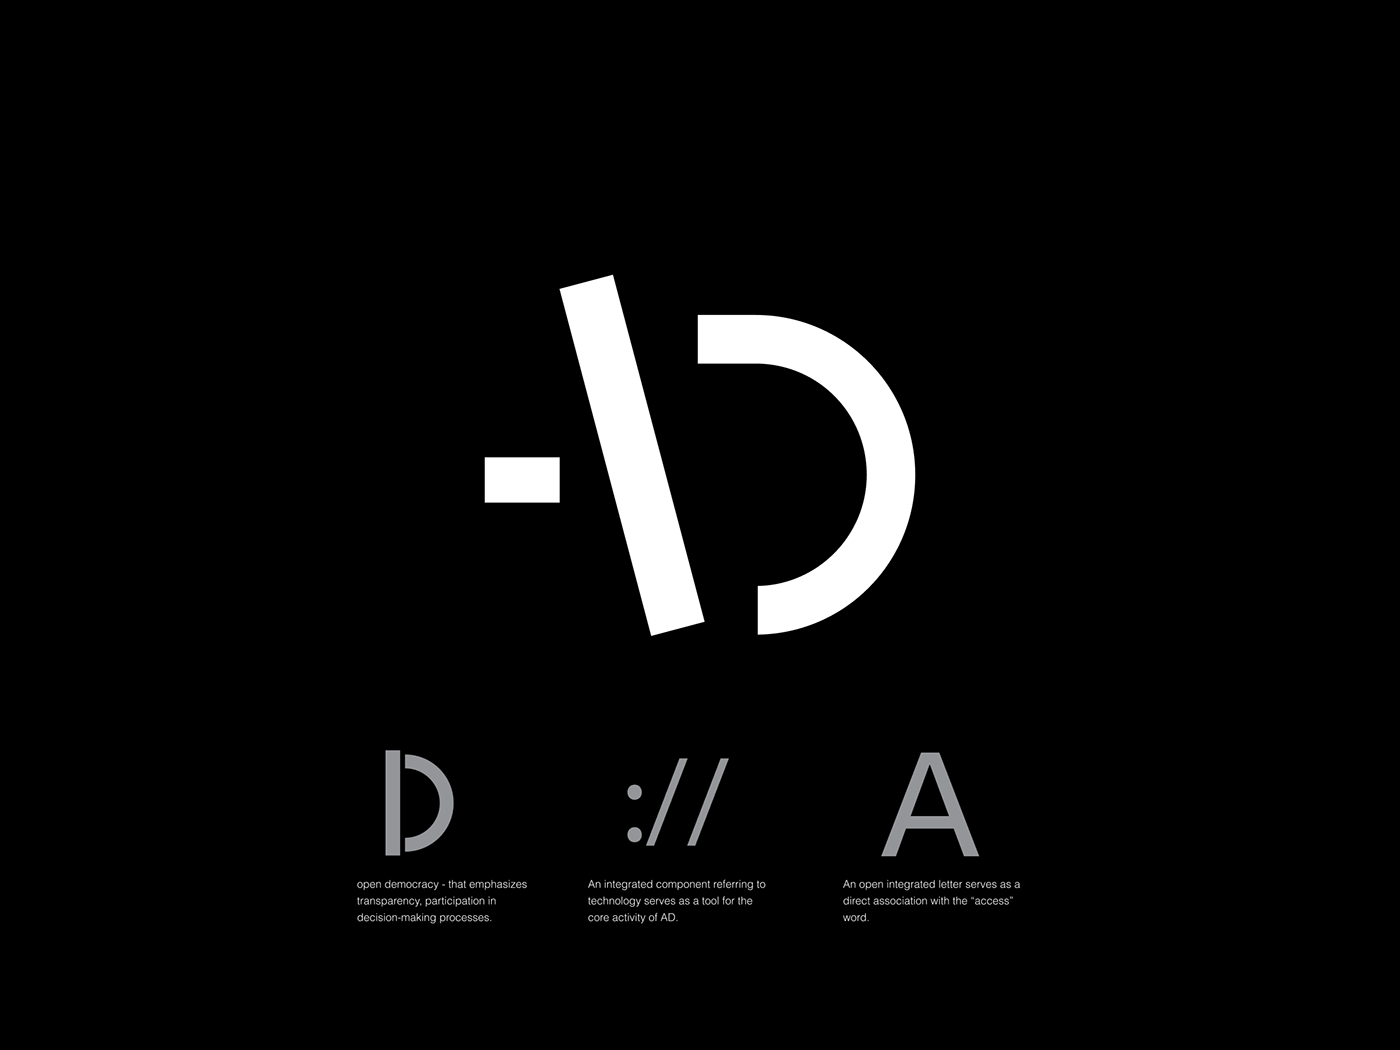 #Branding Branding design brand Technology democracy logo Europe #brandidentity #transparency artificialintelligence